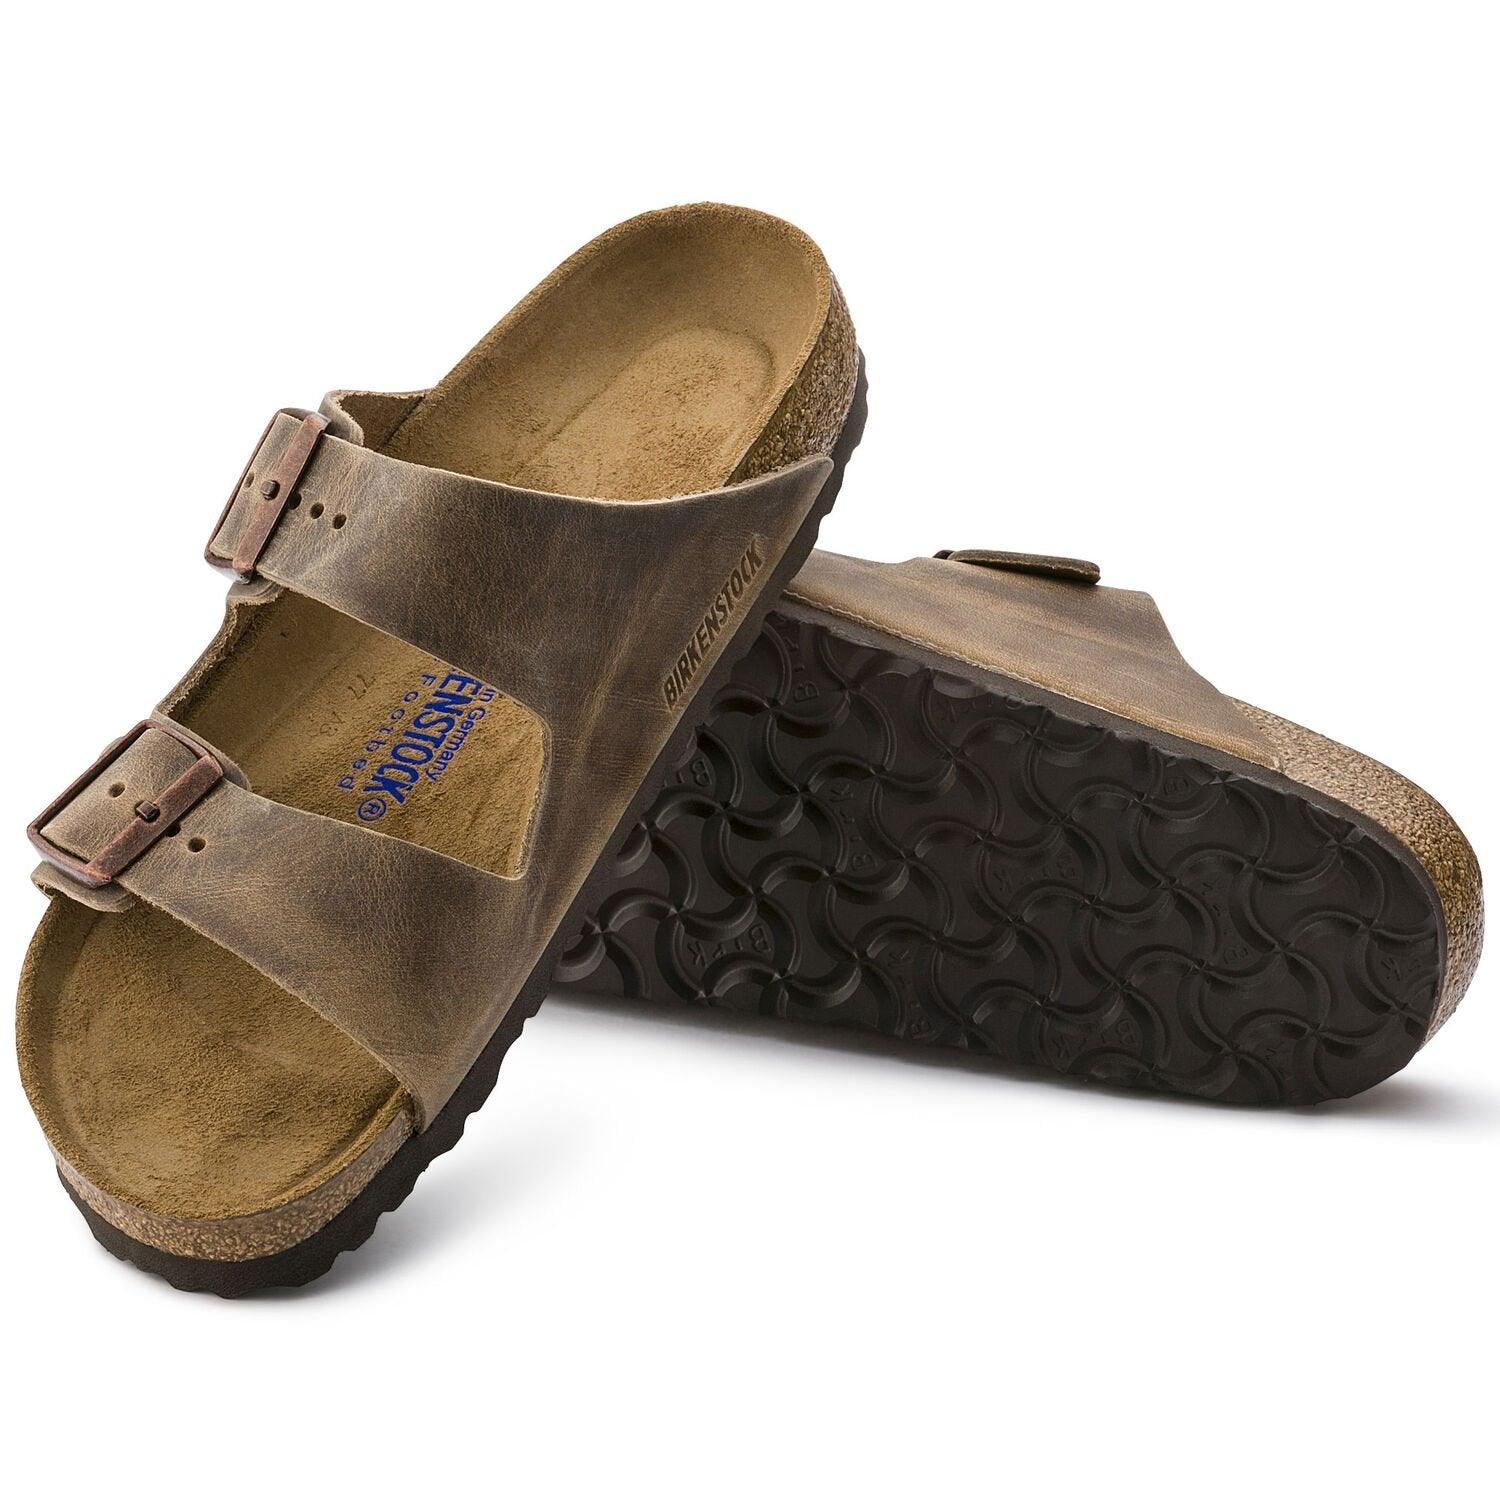 Birkenstock - Arizona Soft Footbed - Habana Oiled Leather 43